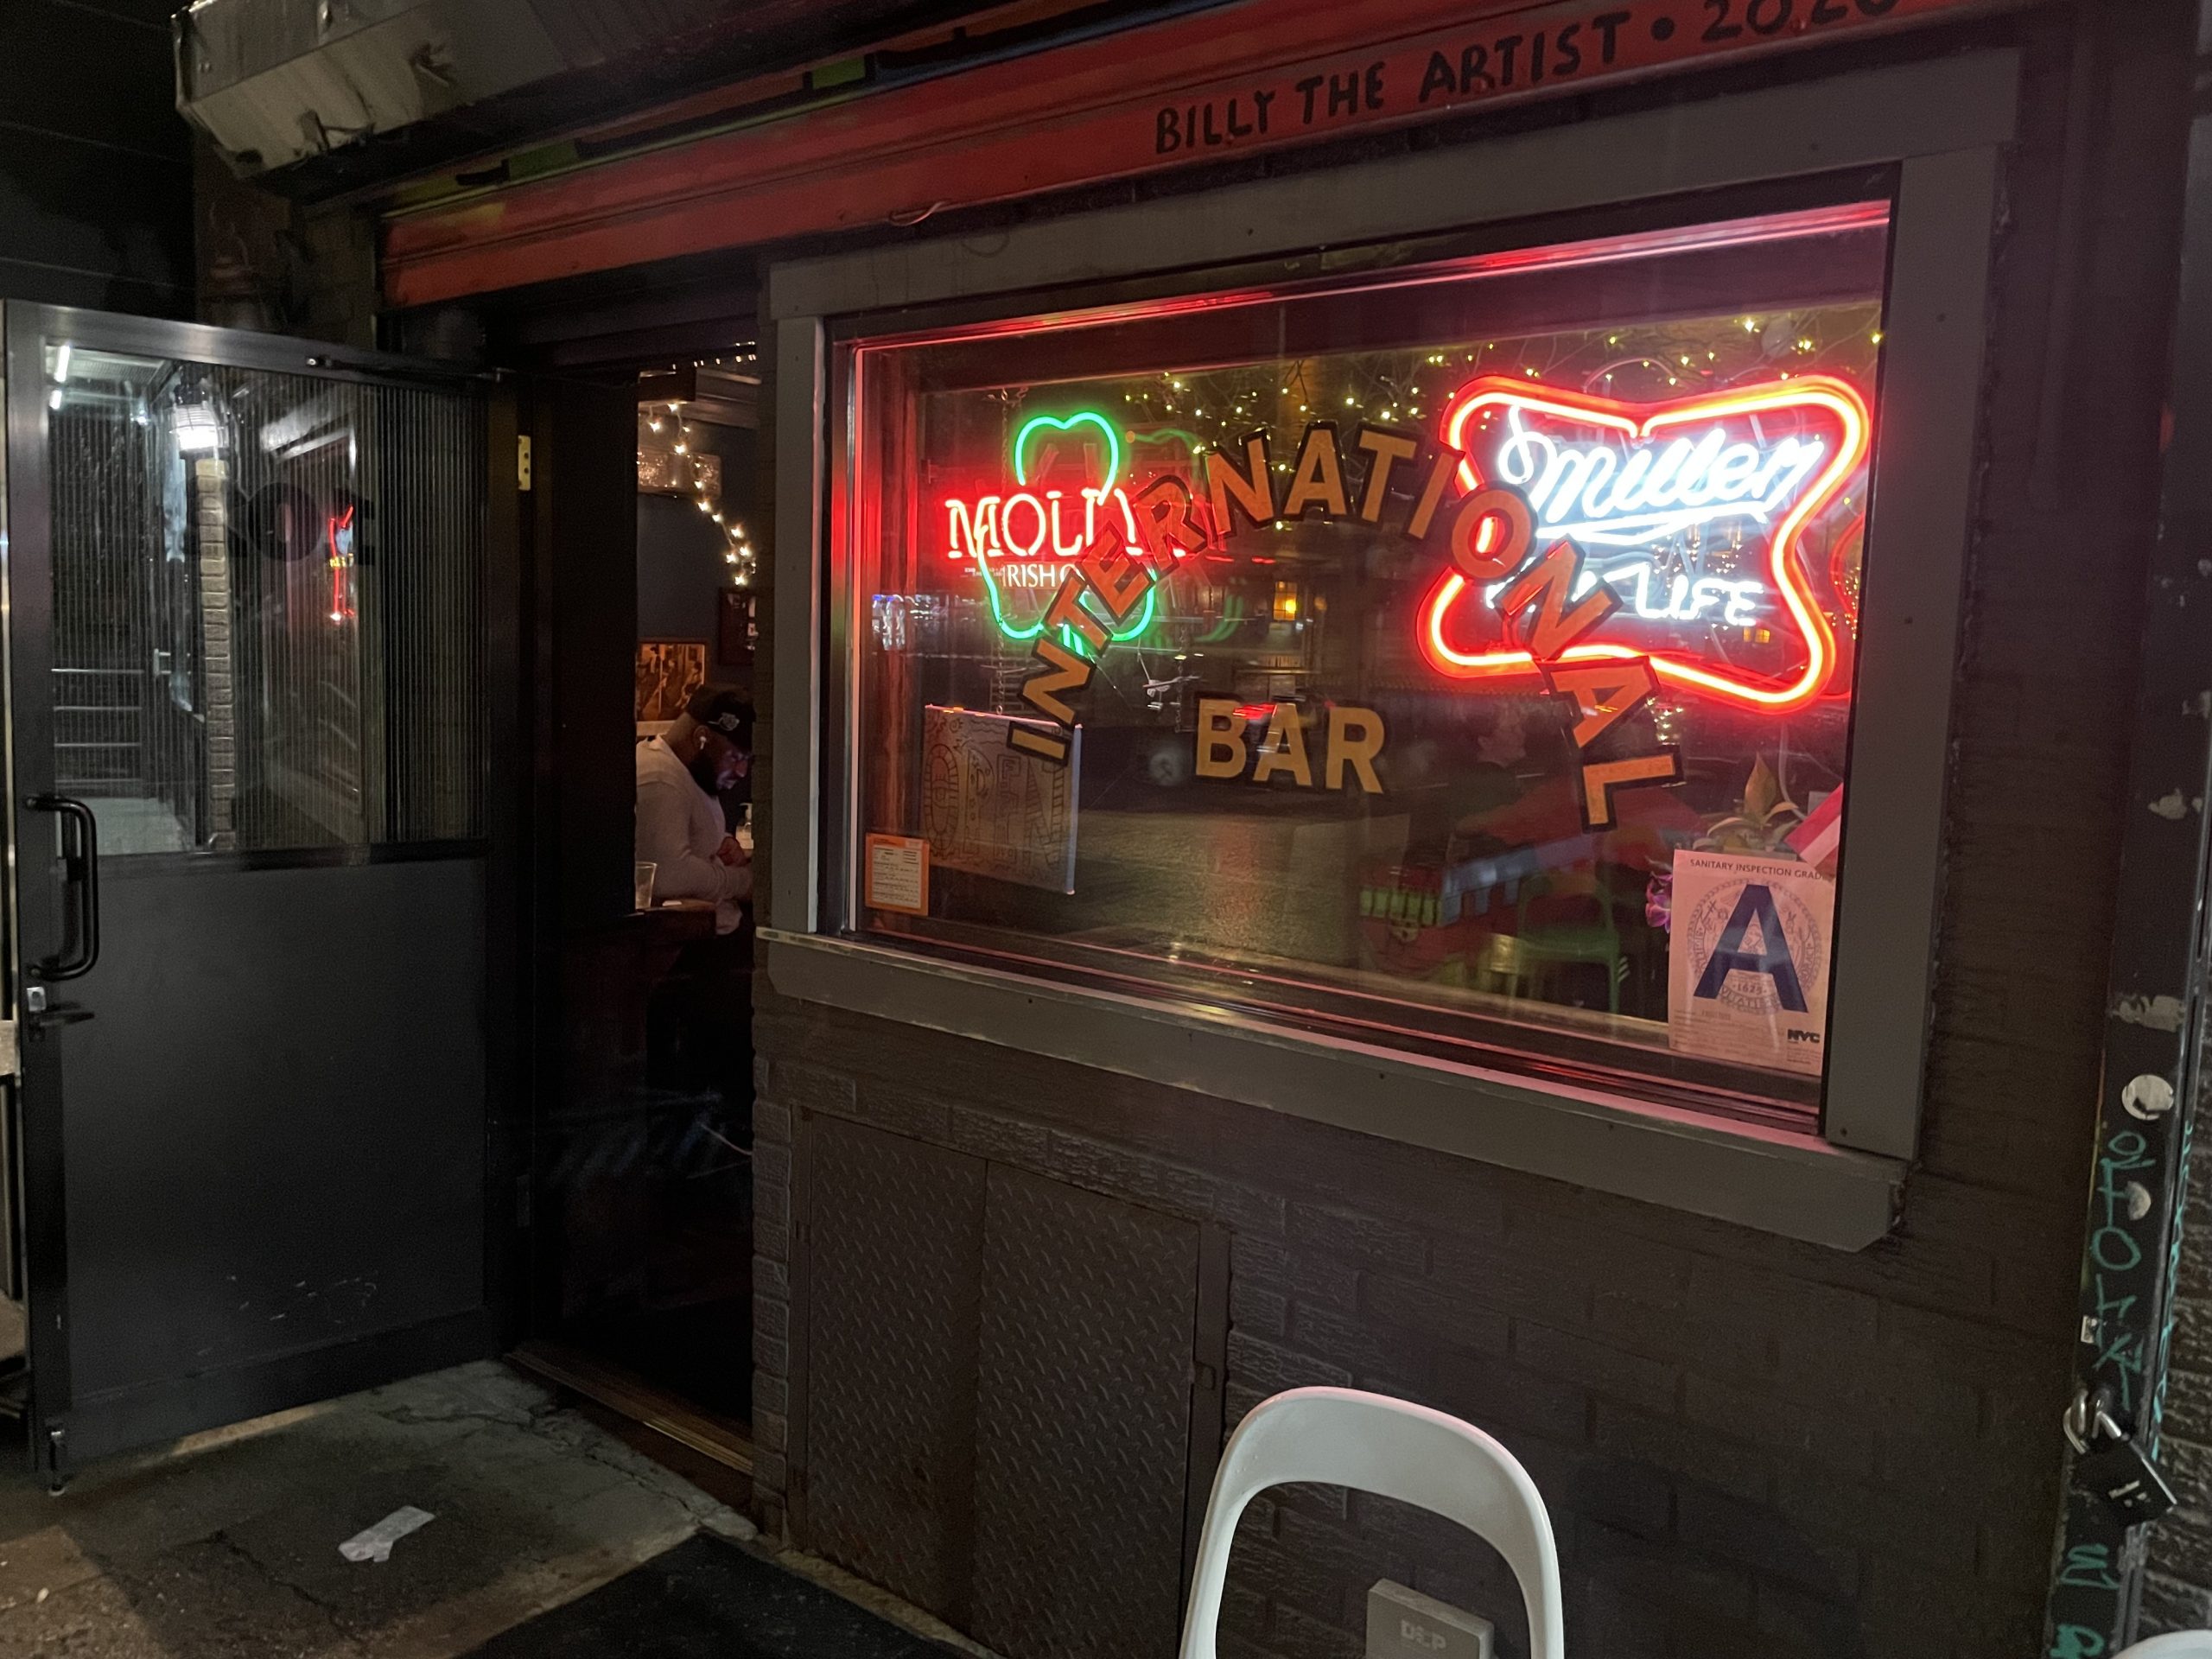 International Bar - New York Dive Bar - Outside Sign